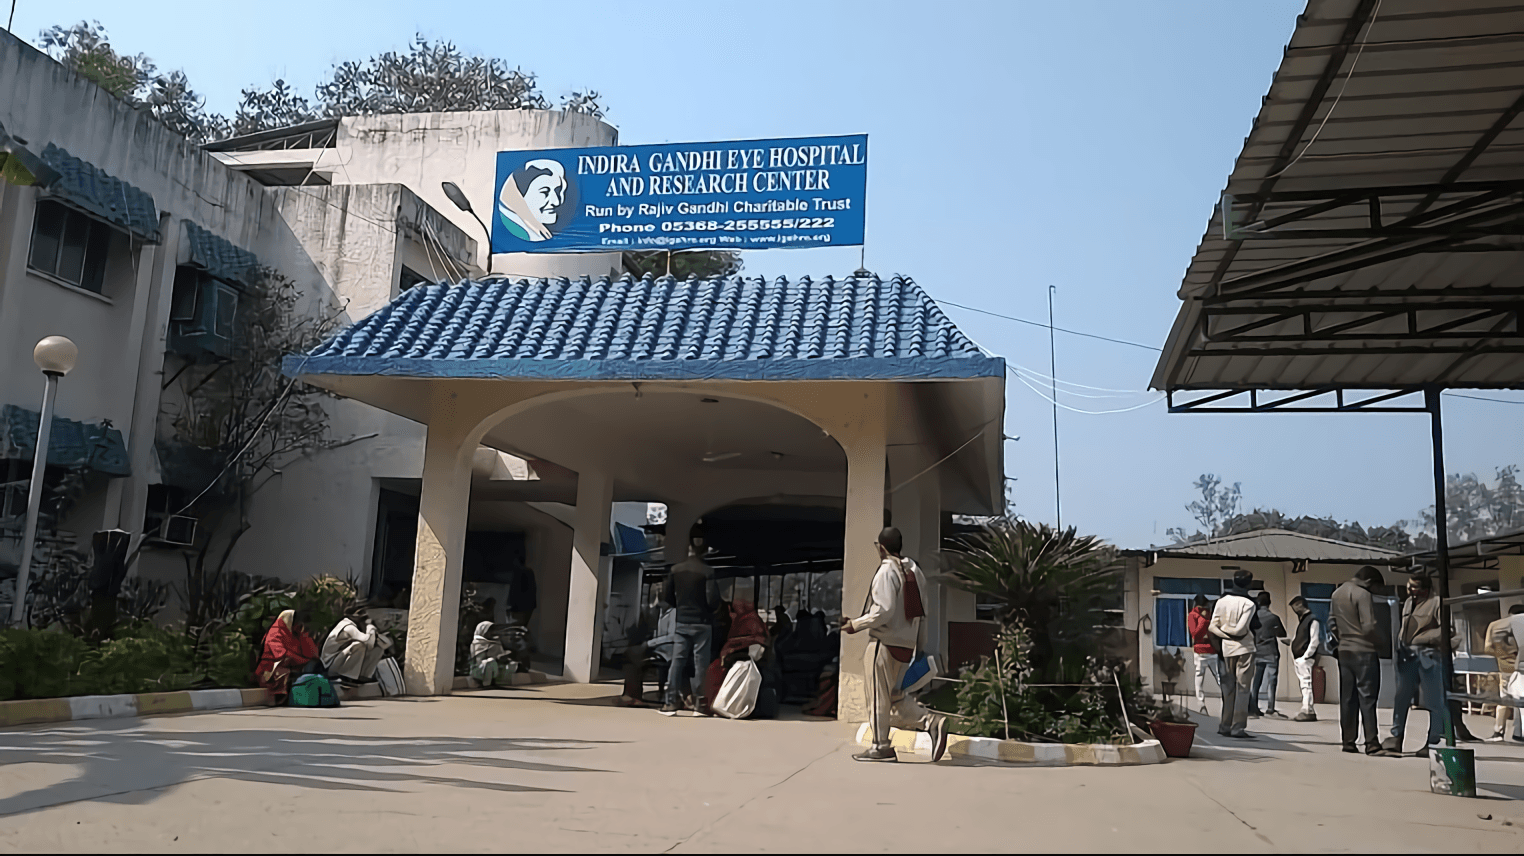 Indira Gandhi Eye Hospital & Research Center